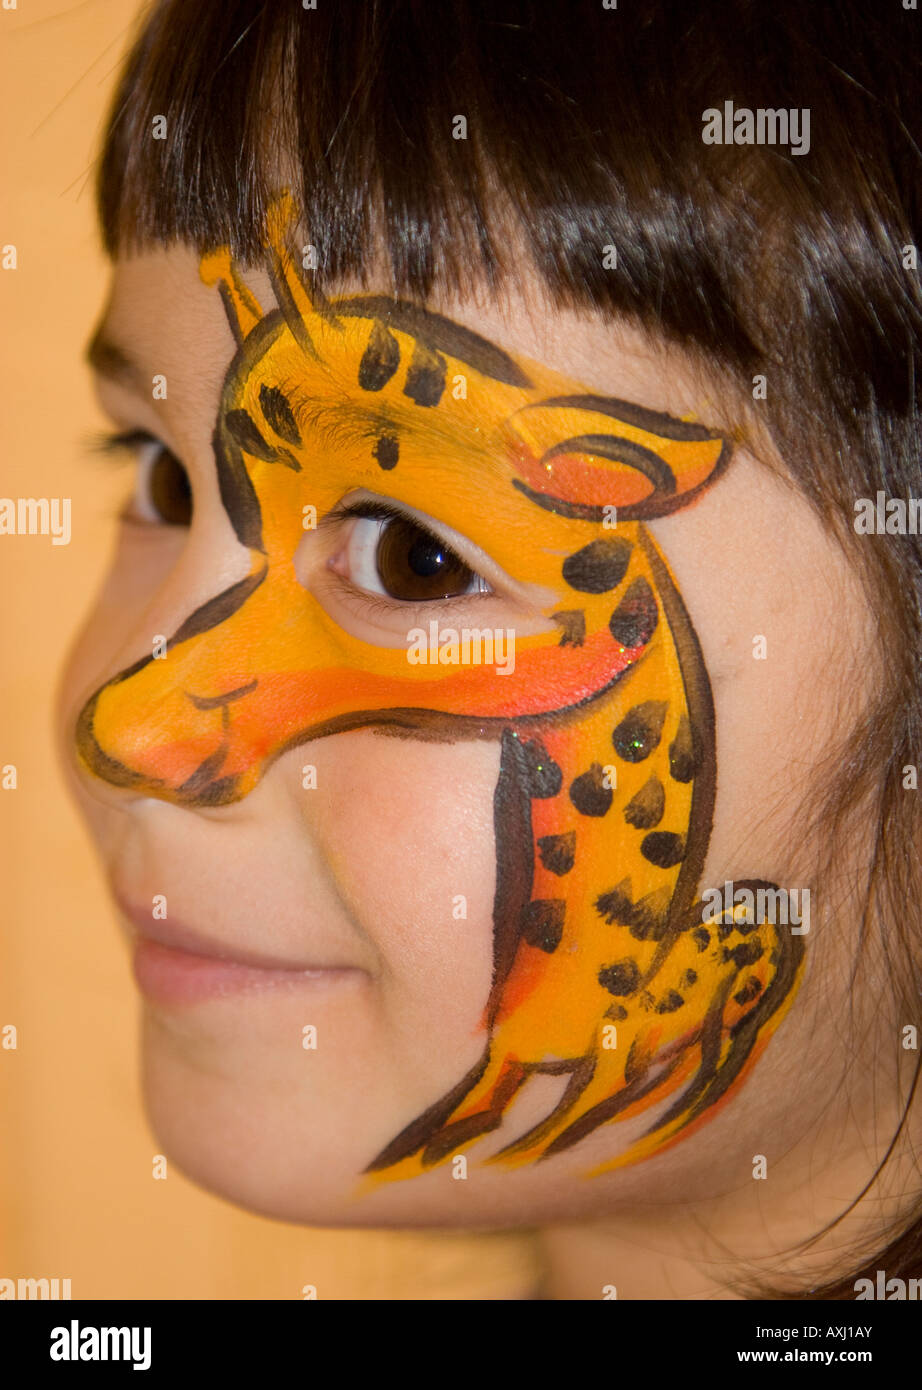 Muchacha con jirafas pintura facial Fotografía de stock - Alamy